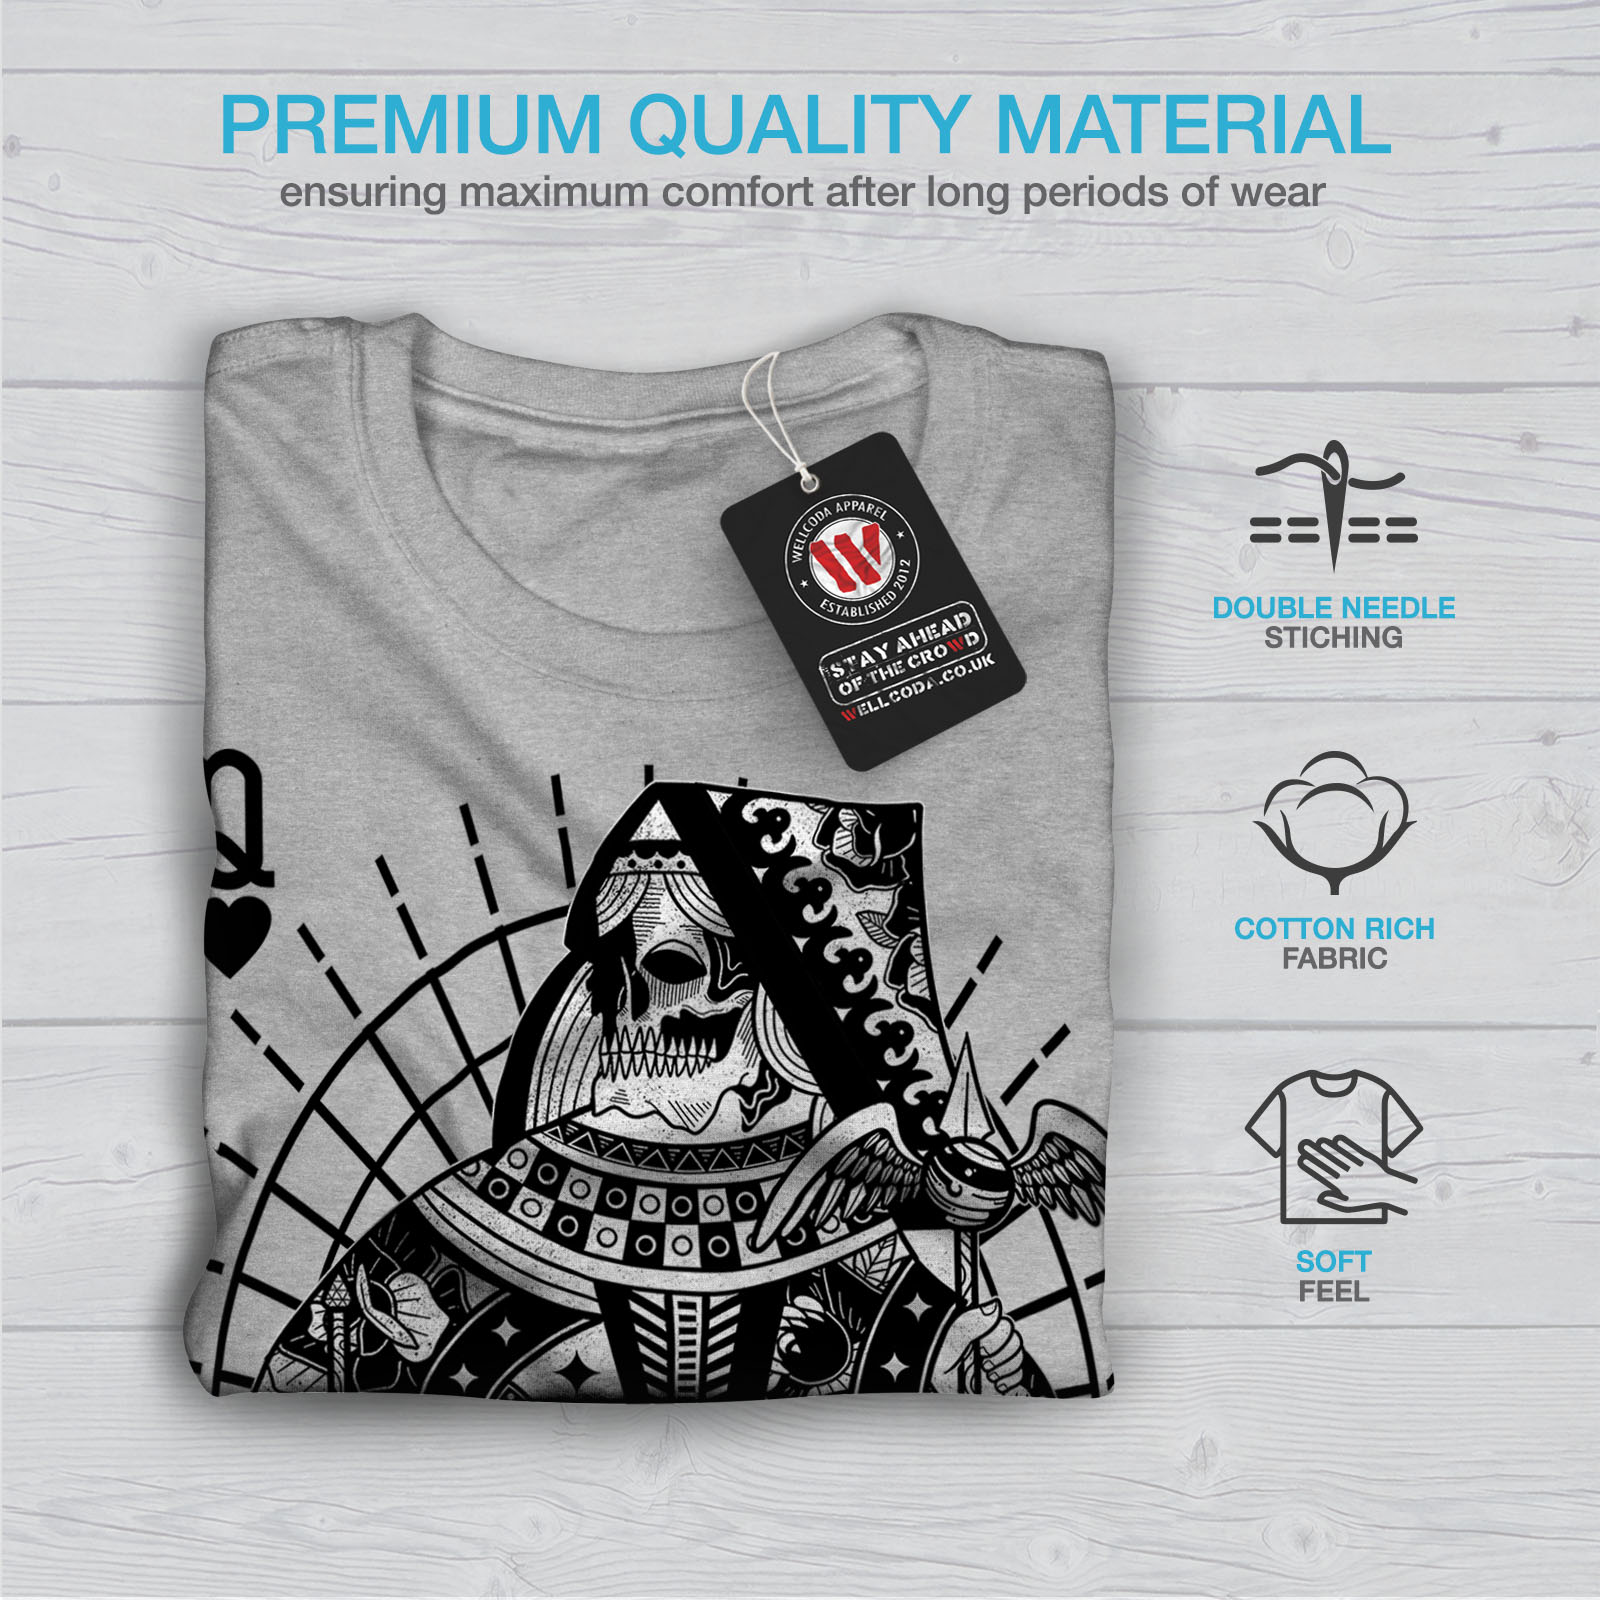 Graphic Design Printed Tee Wellcoda Poker Queen Skull Mens T-shirt